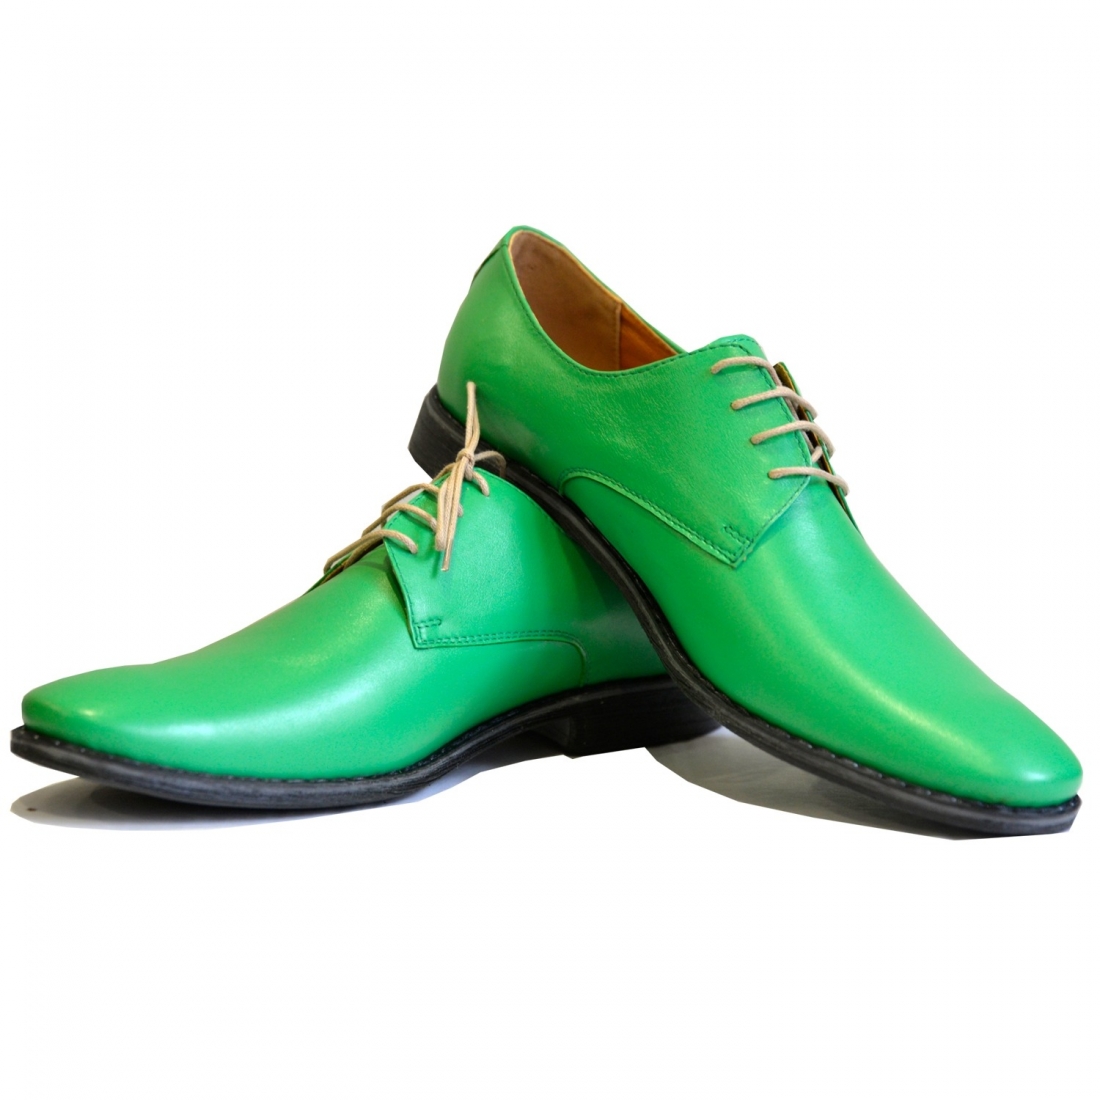 Modello Greanero - Классическая обувь - Handmade Colorful Italian Leather Shoes